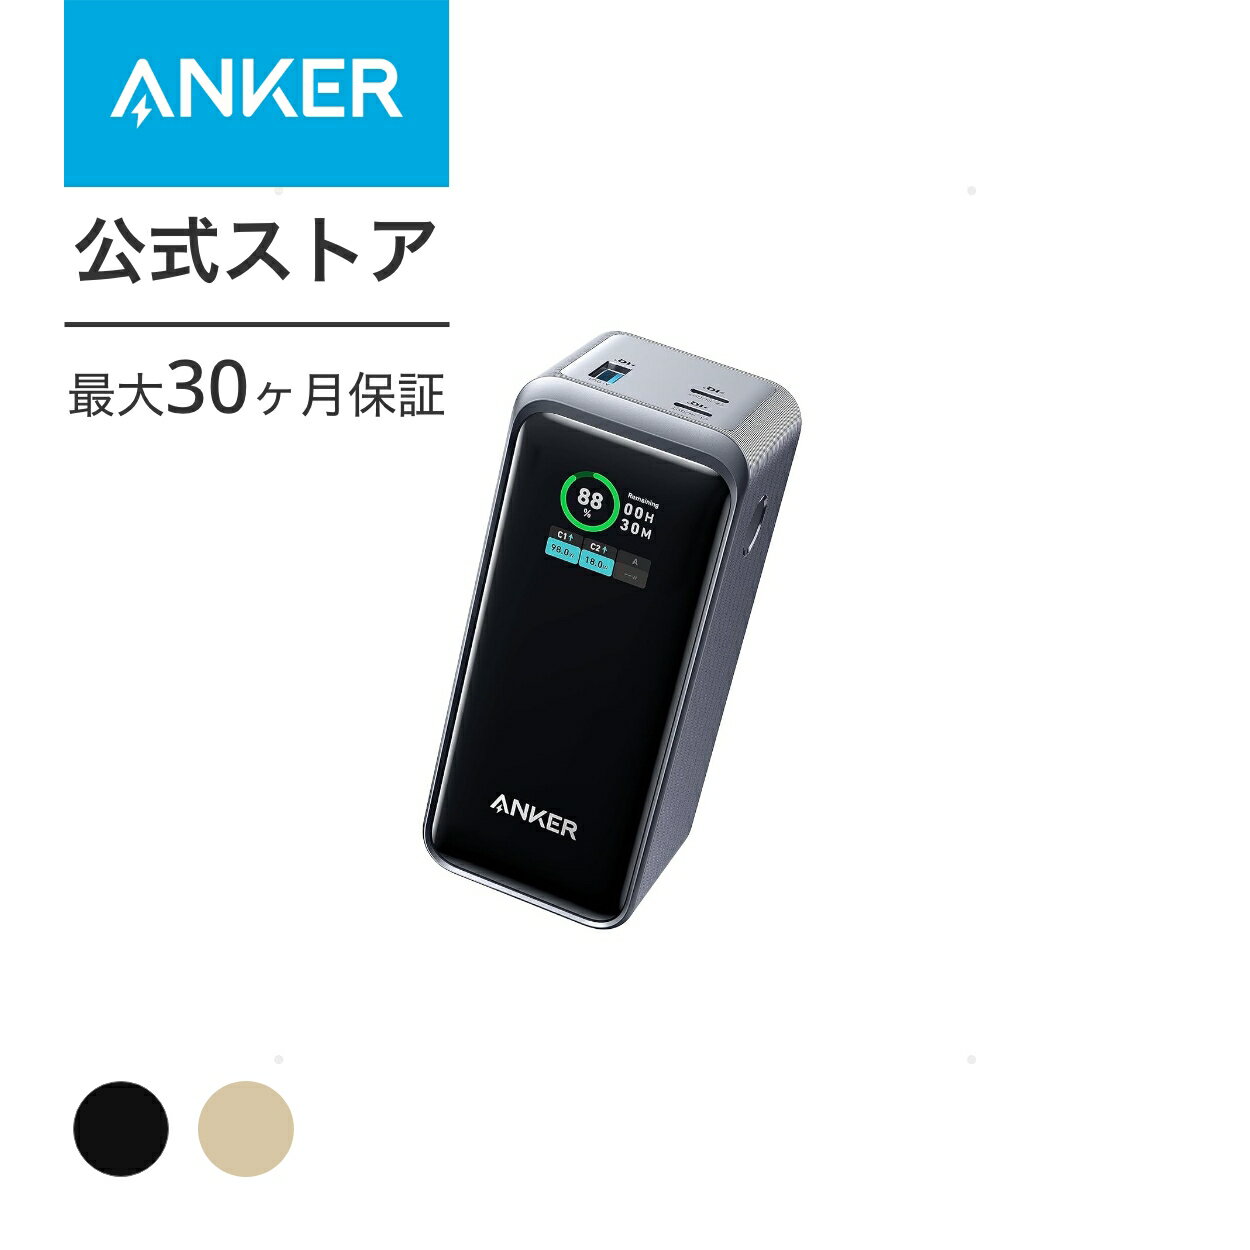 Anker Prime Power Bank (20000m